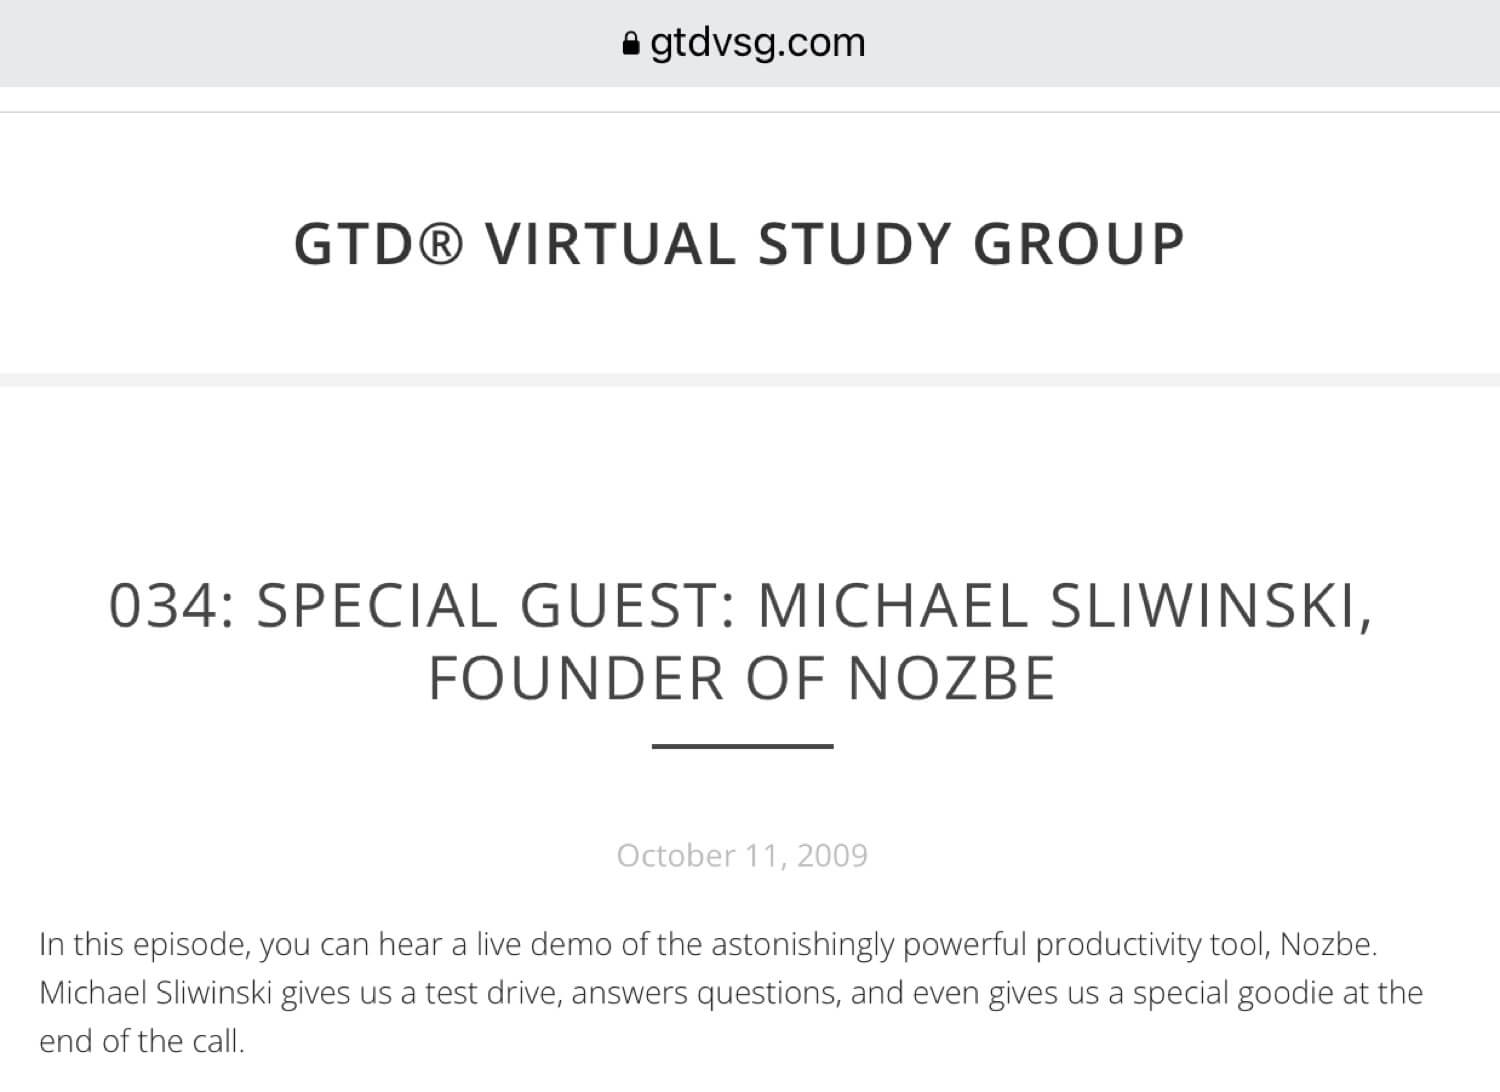 On GTD Virtual Study Group explaining Nozbe